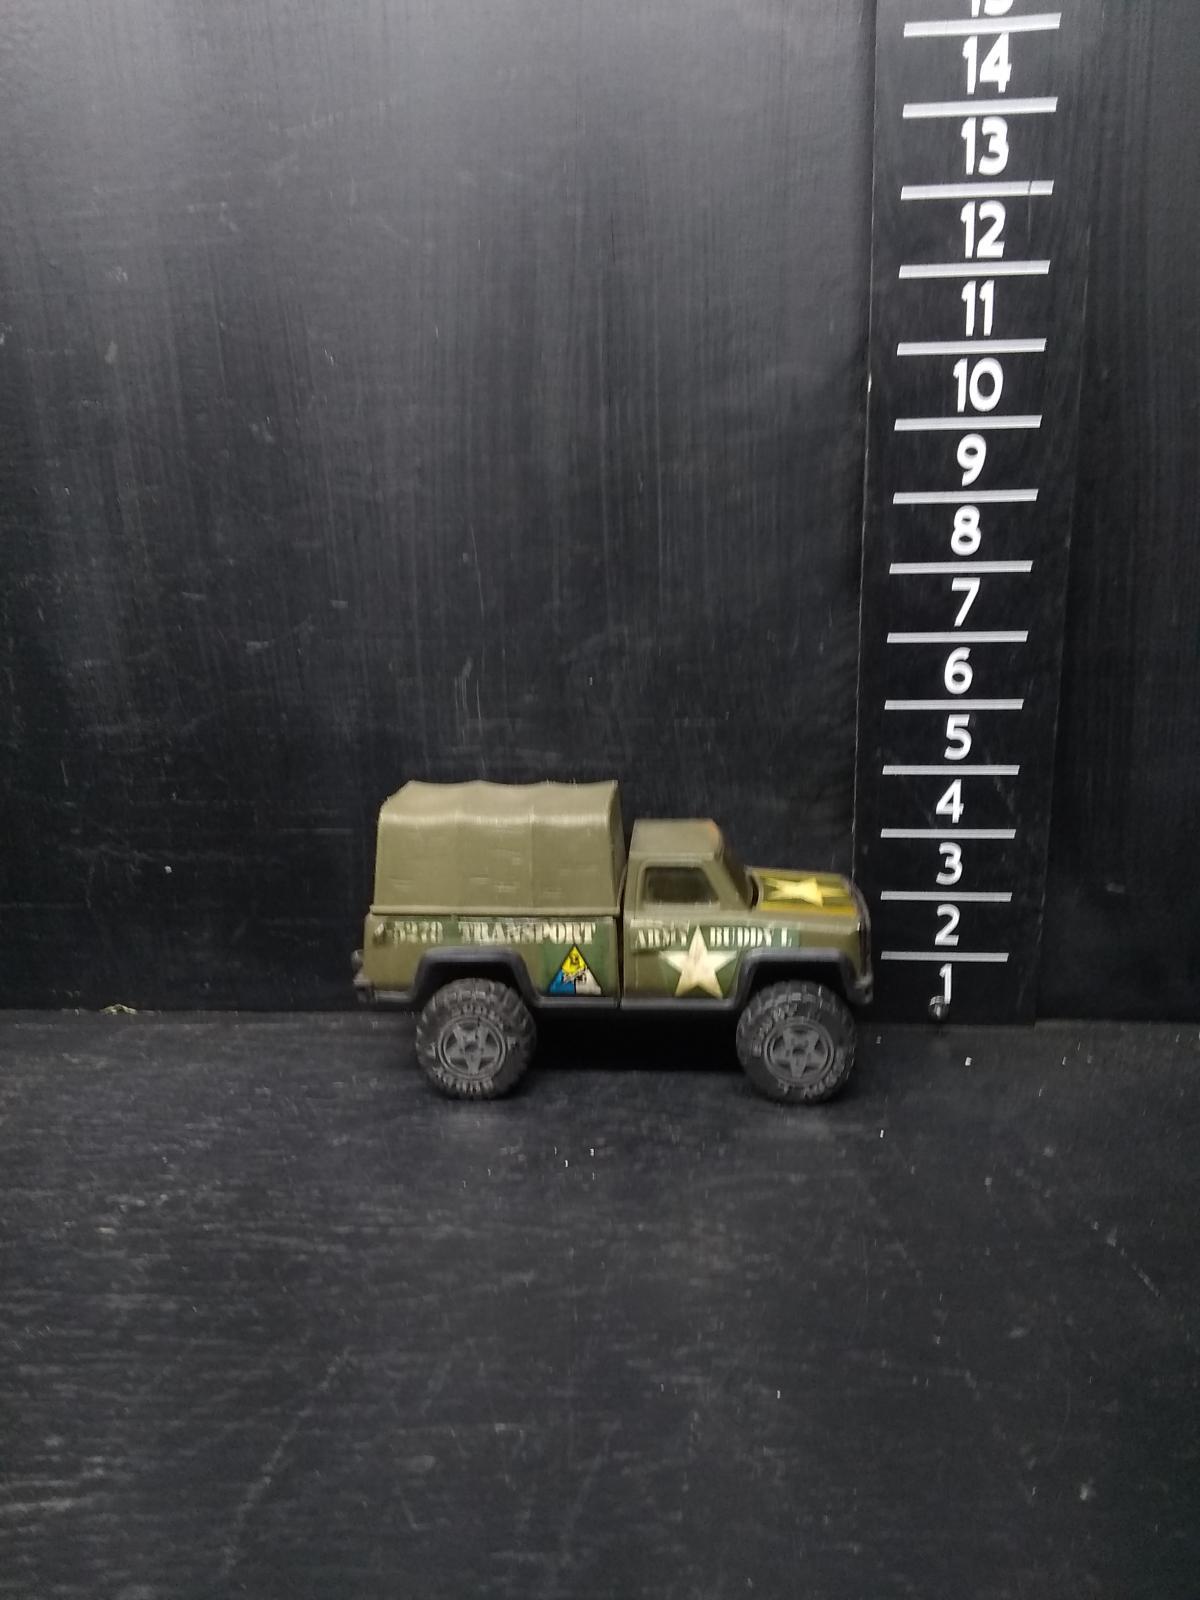 Plastic Buddy L Army Transport Truck Toy